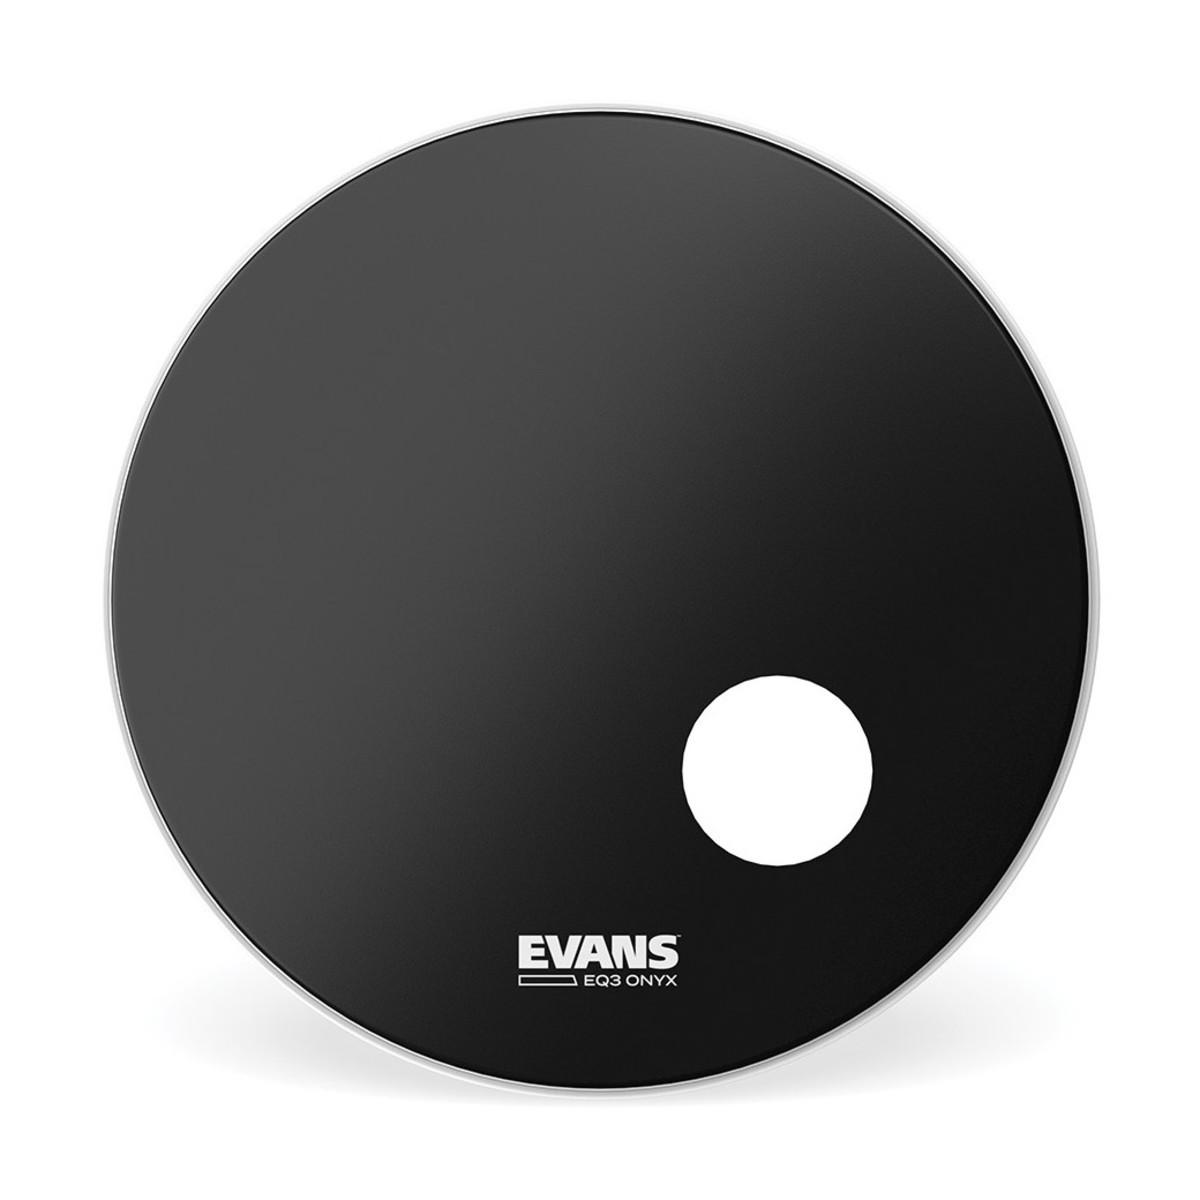 Пластик для барабана Evans BD20RONX